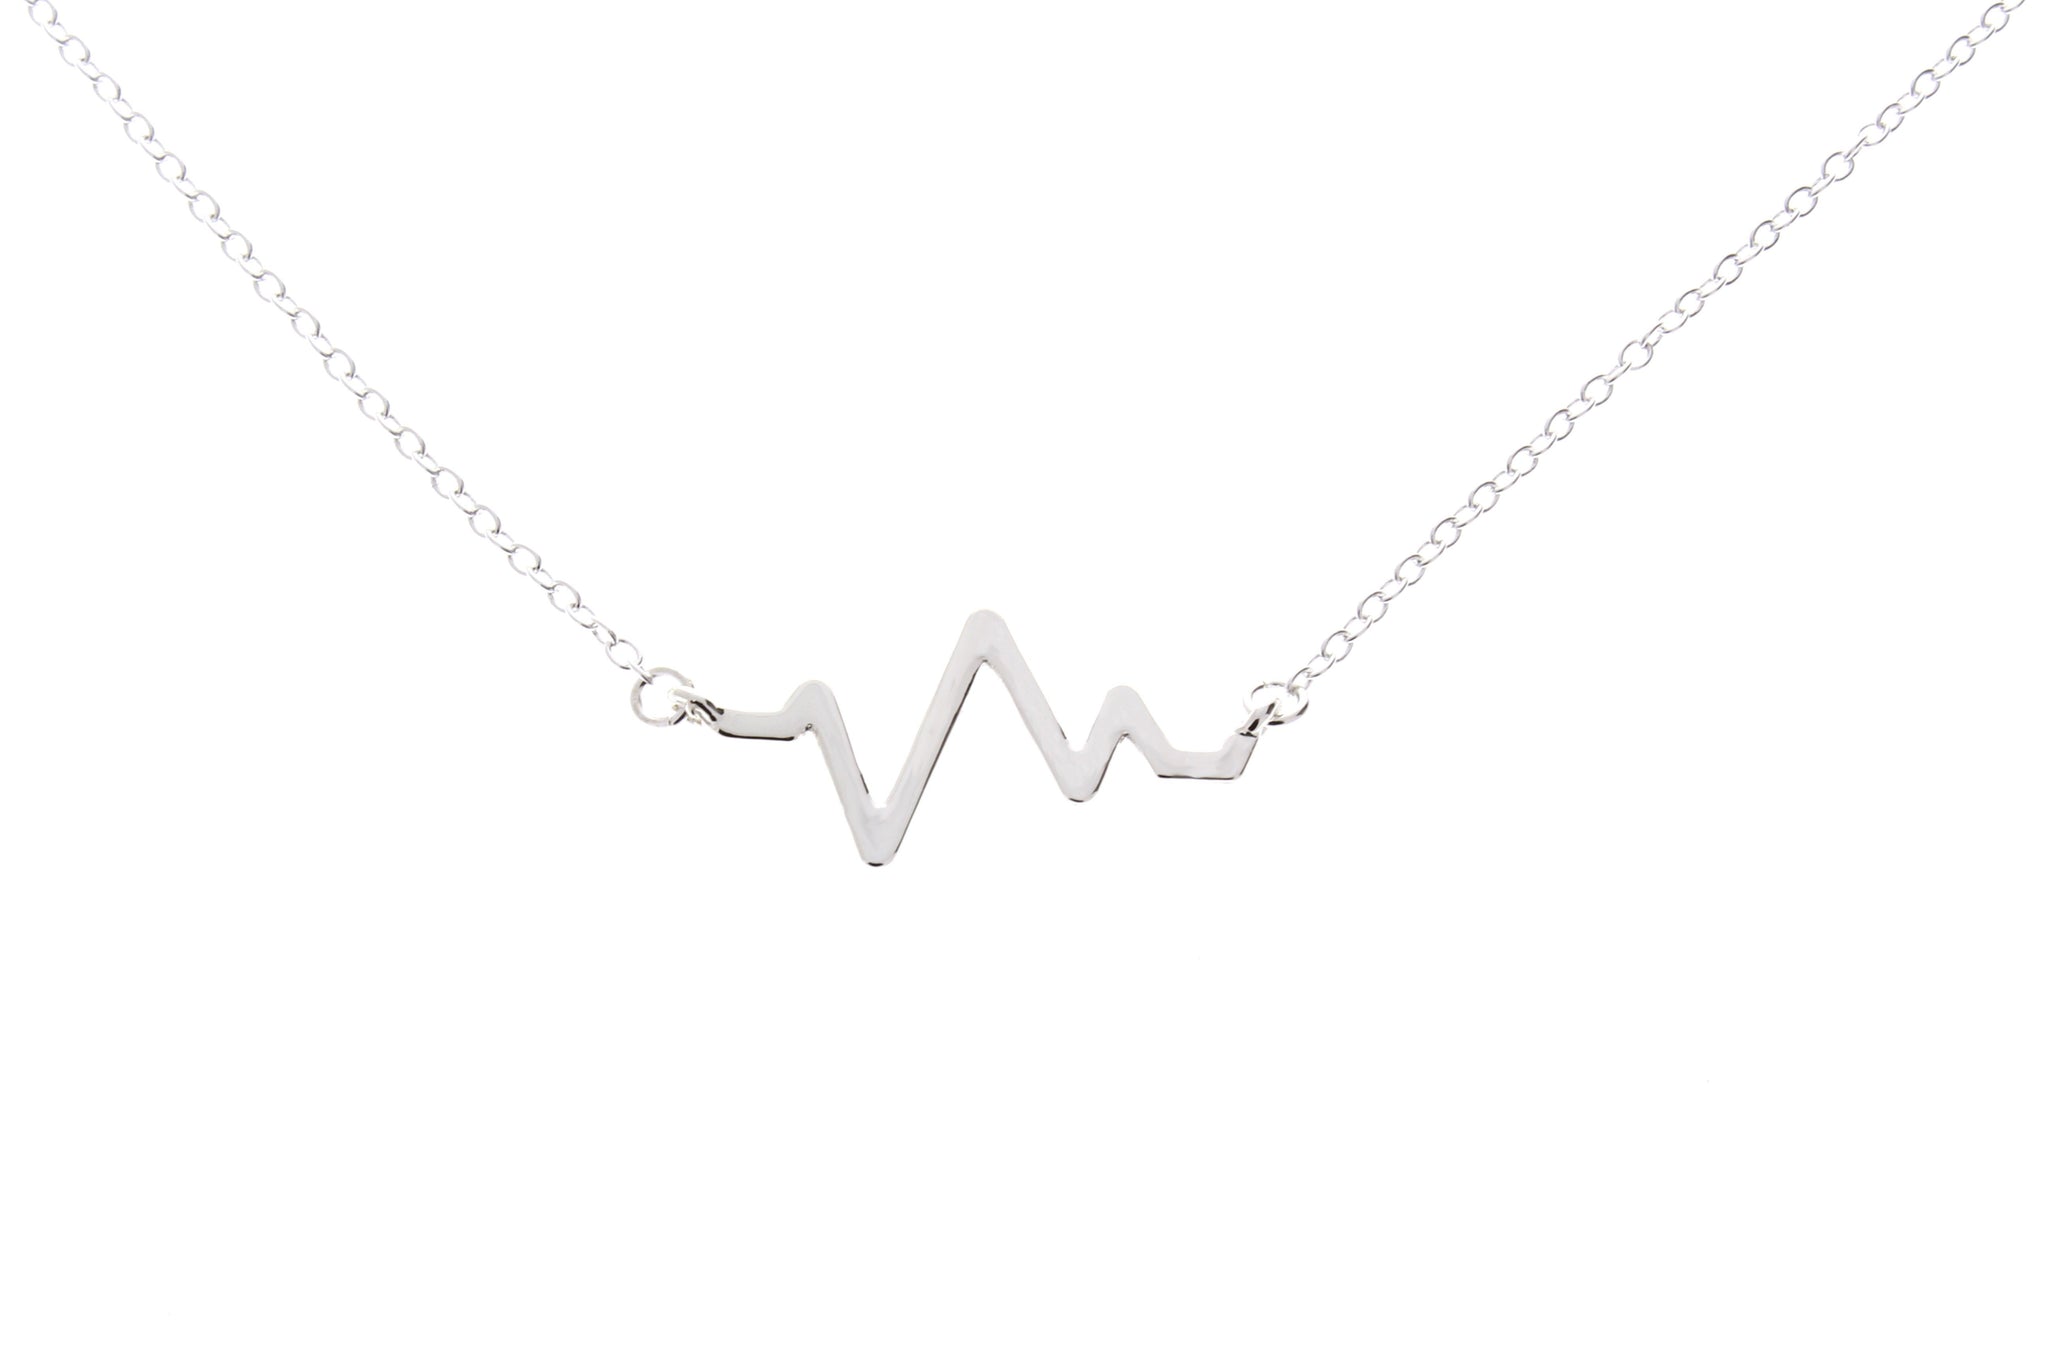 Electrocardiogram EKG Heartbeat Necklace